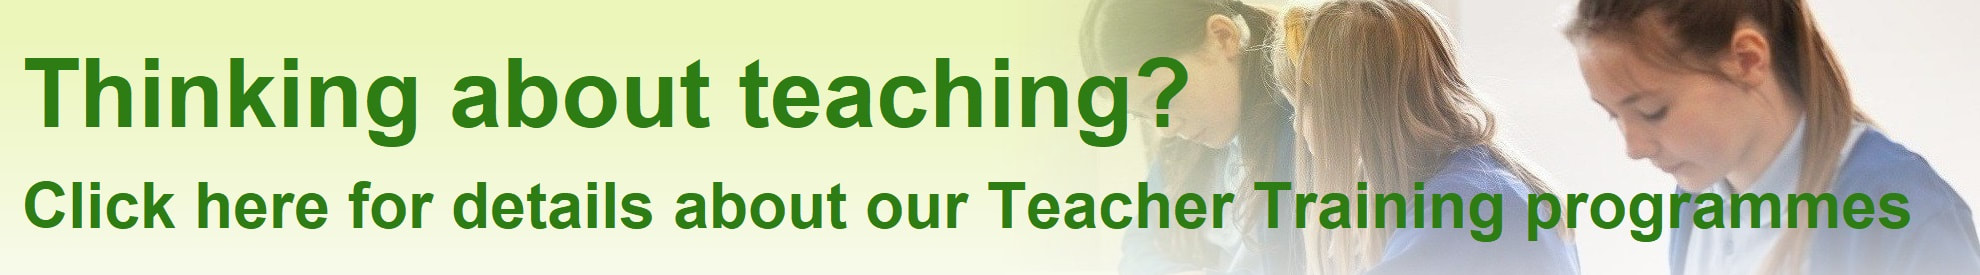 Thinking about teaching? Visit /fwtsa/initial-teacher-training